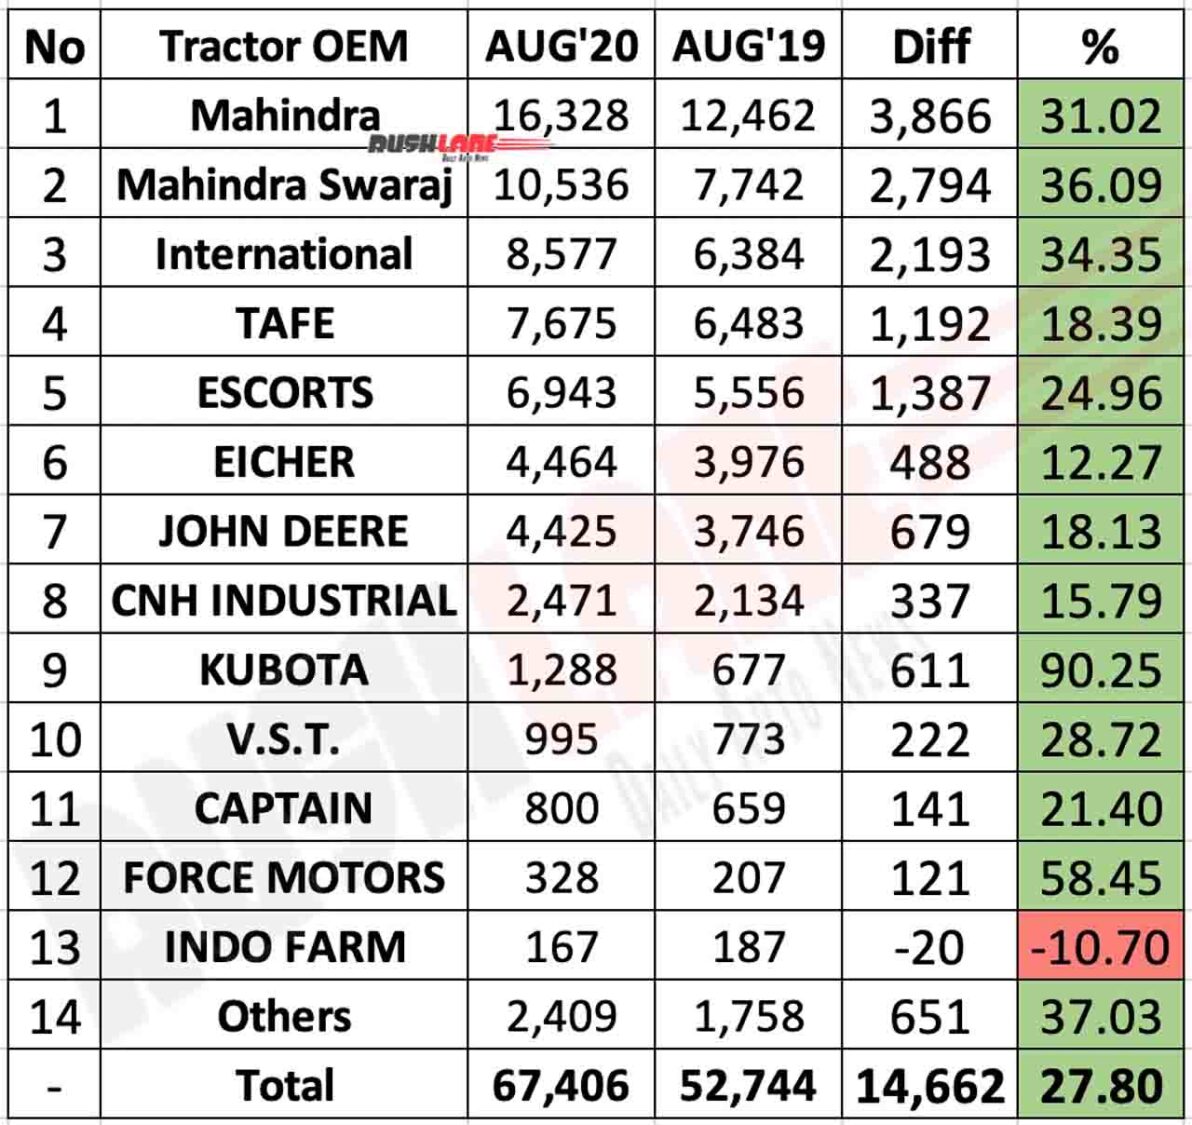 Tractor sales as per OEM in Aug 2020